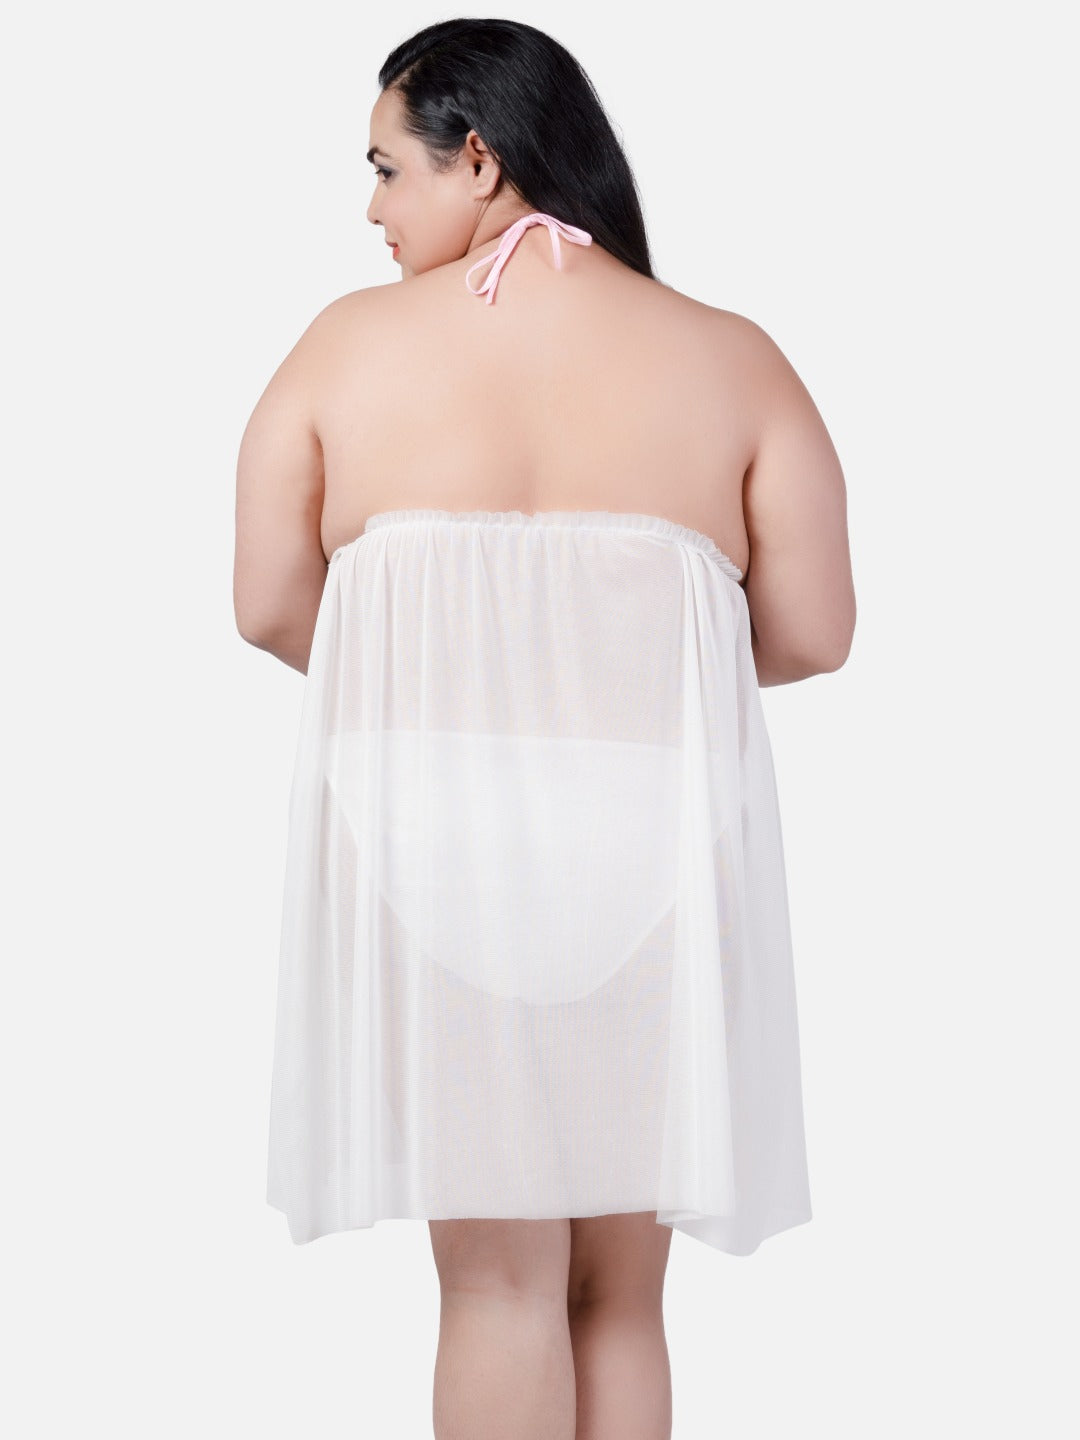 Plus Size Sexy Babydoll Honeymoon Pink White Dress for Women K9RbA